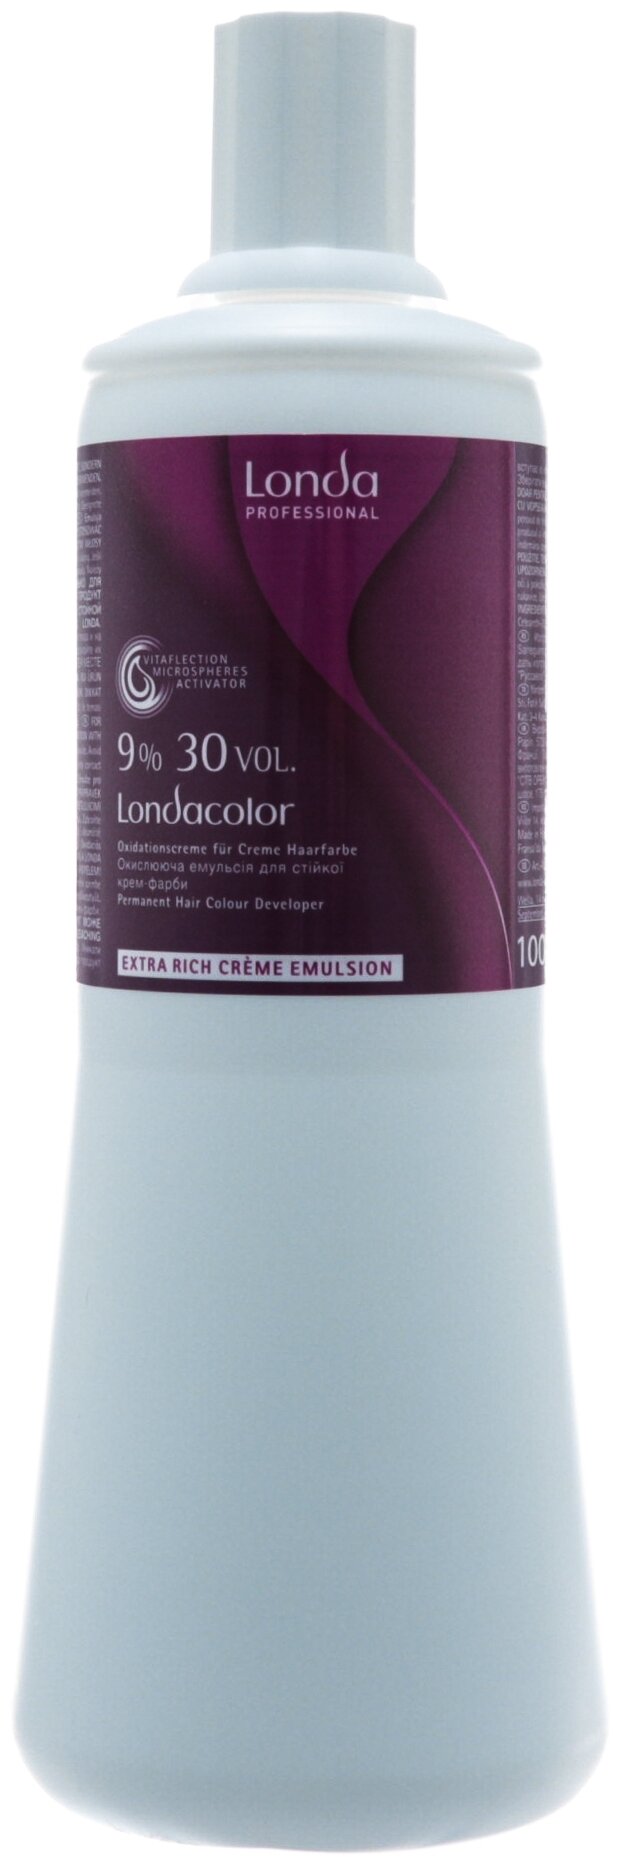 Londa Professional Londacolor     - Extra Rich Creme Emulsion, 9%, 1000 